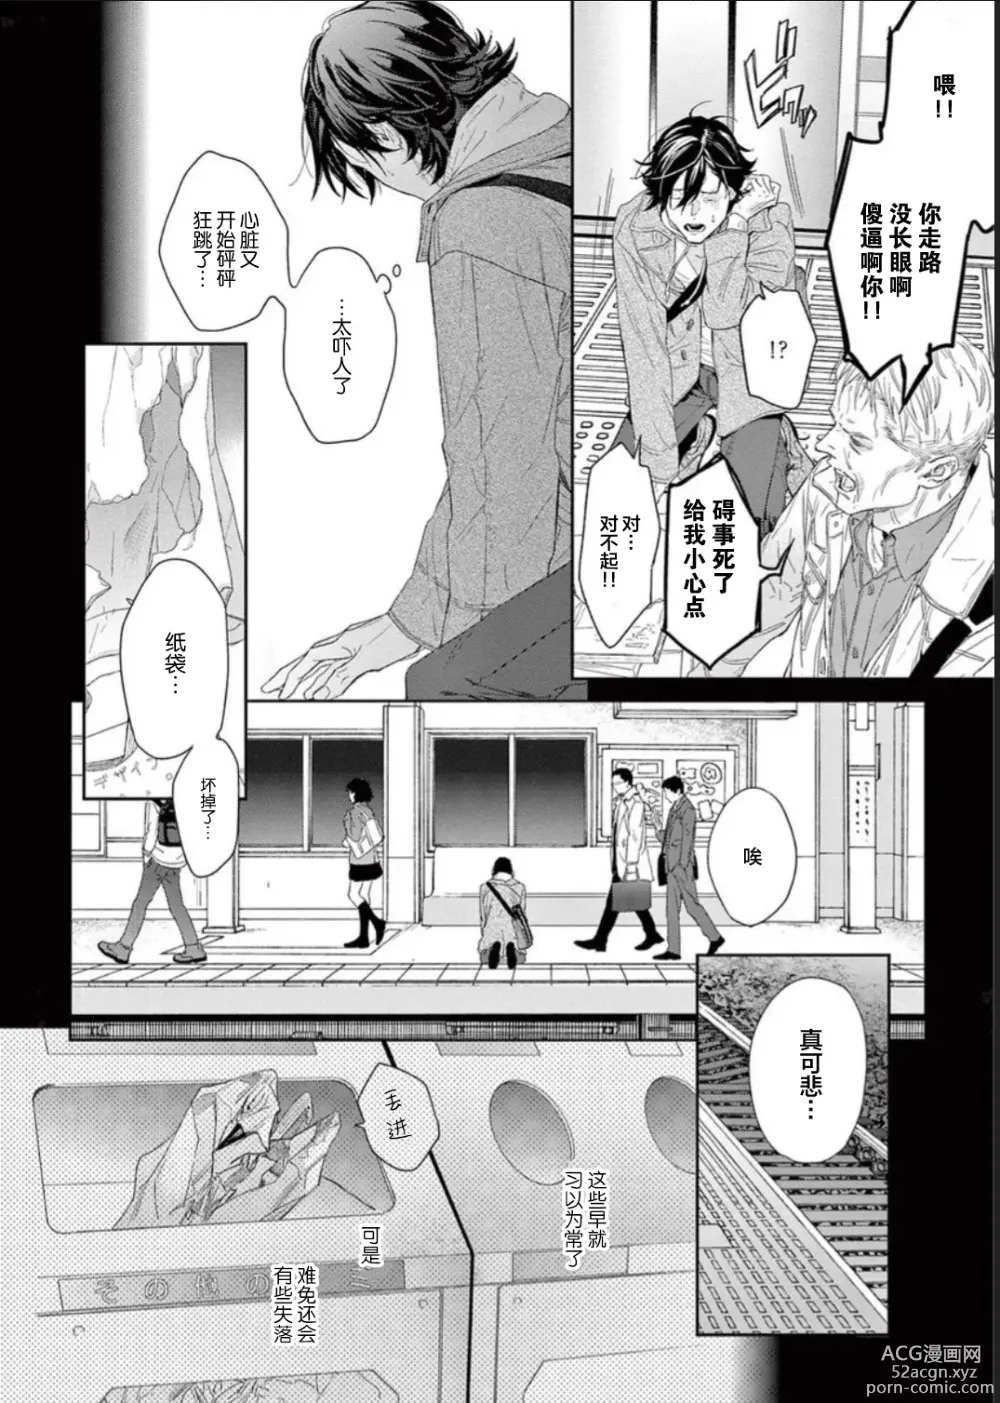 Page 7 of manga 透明的爱之所依